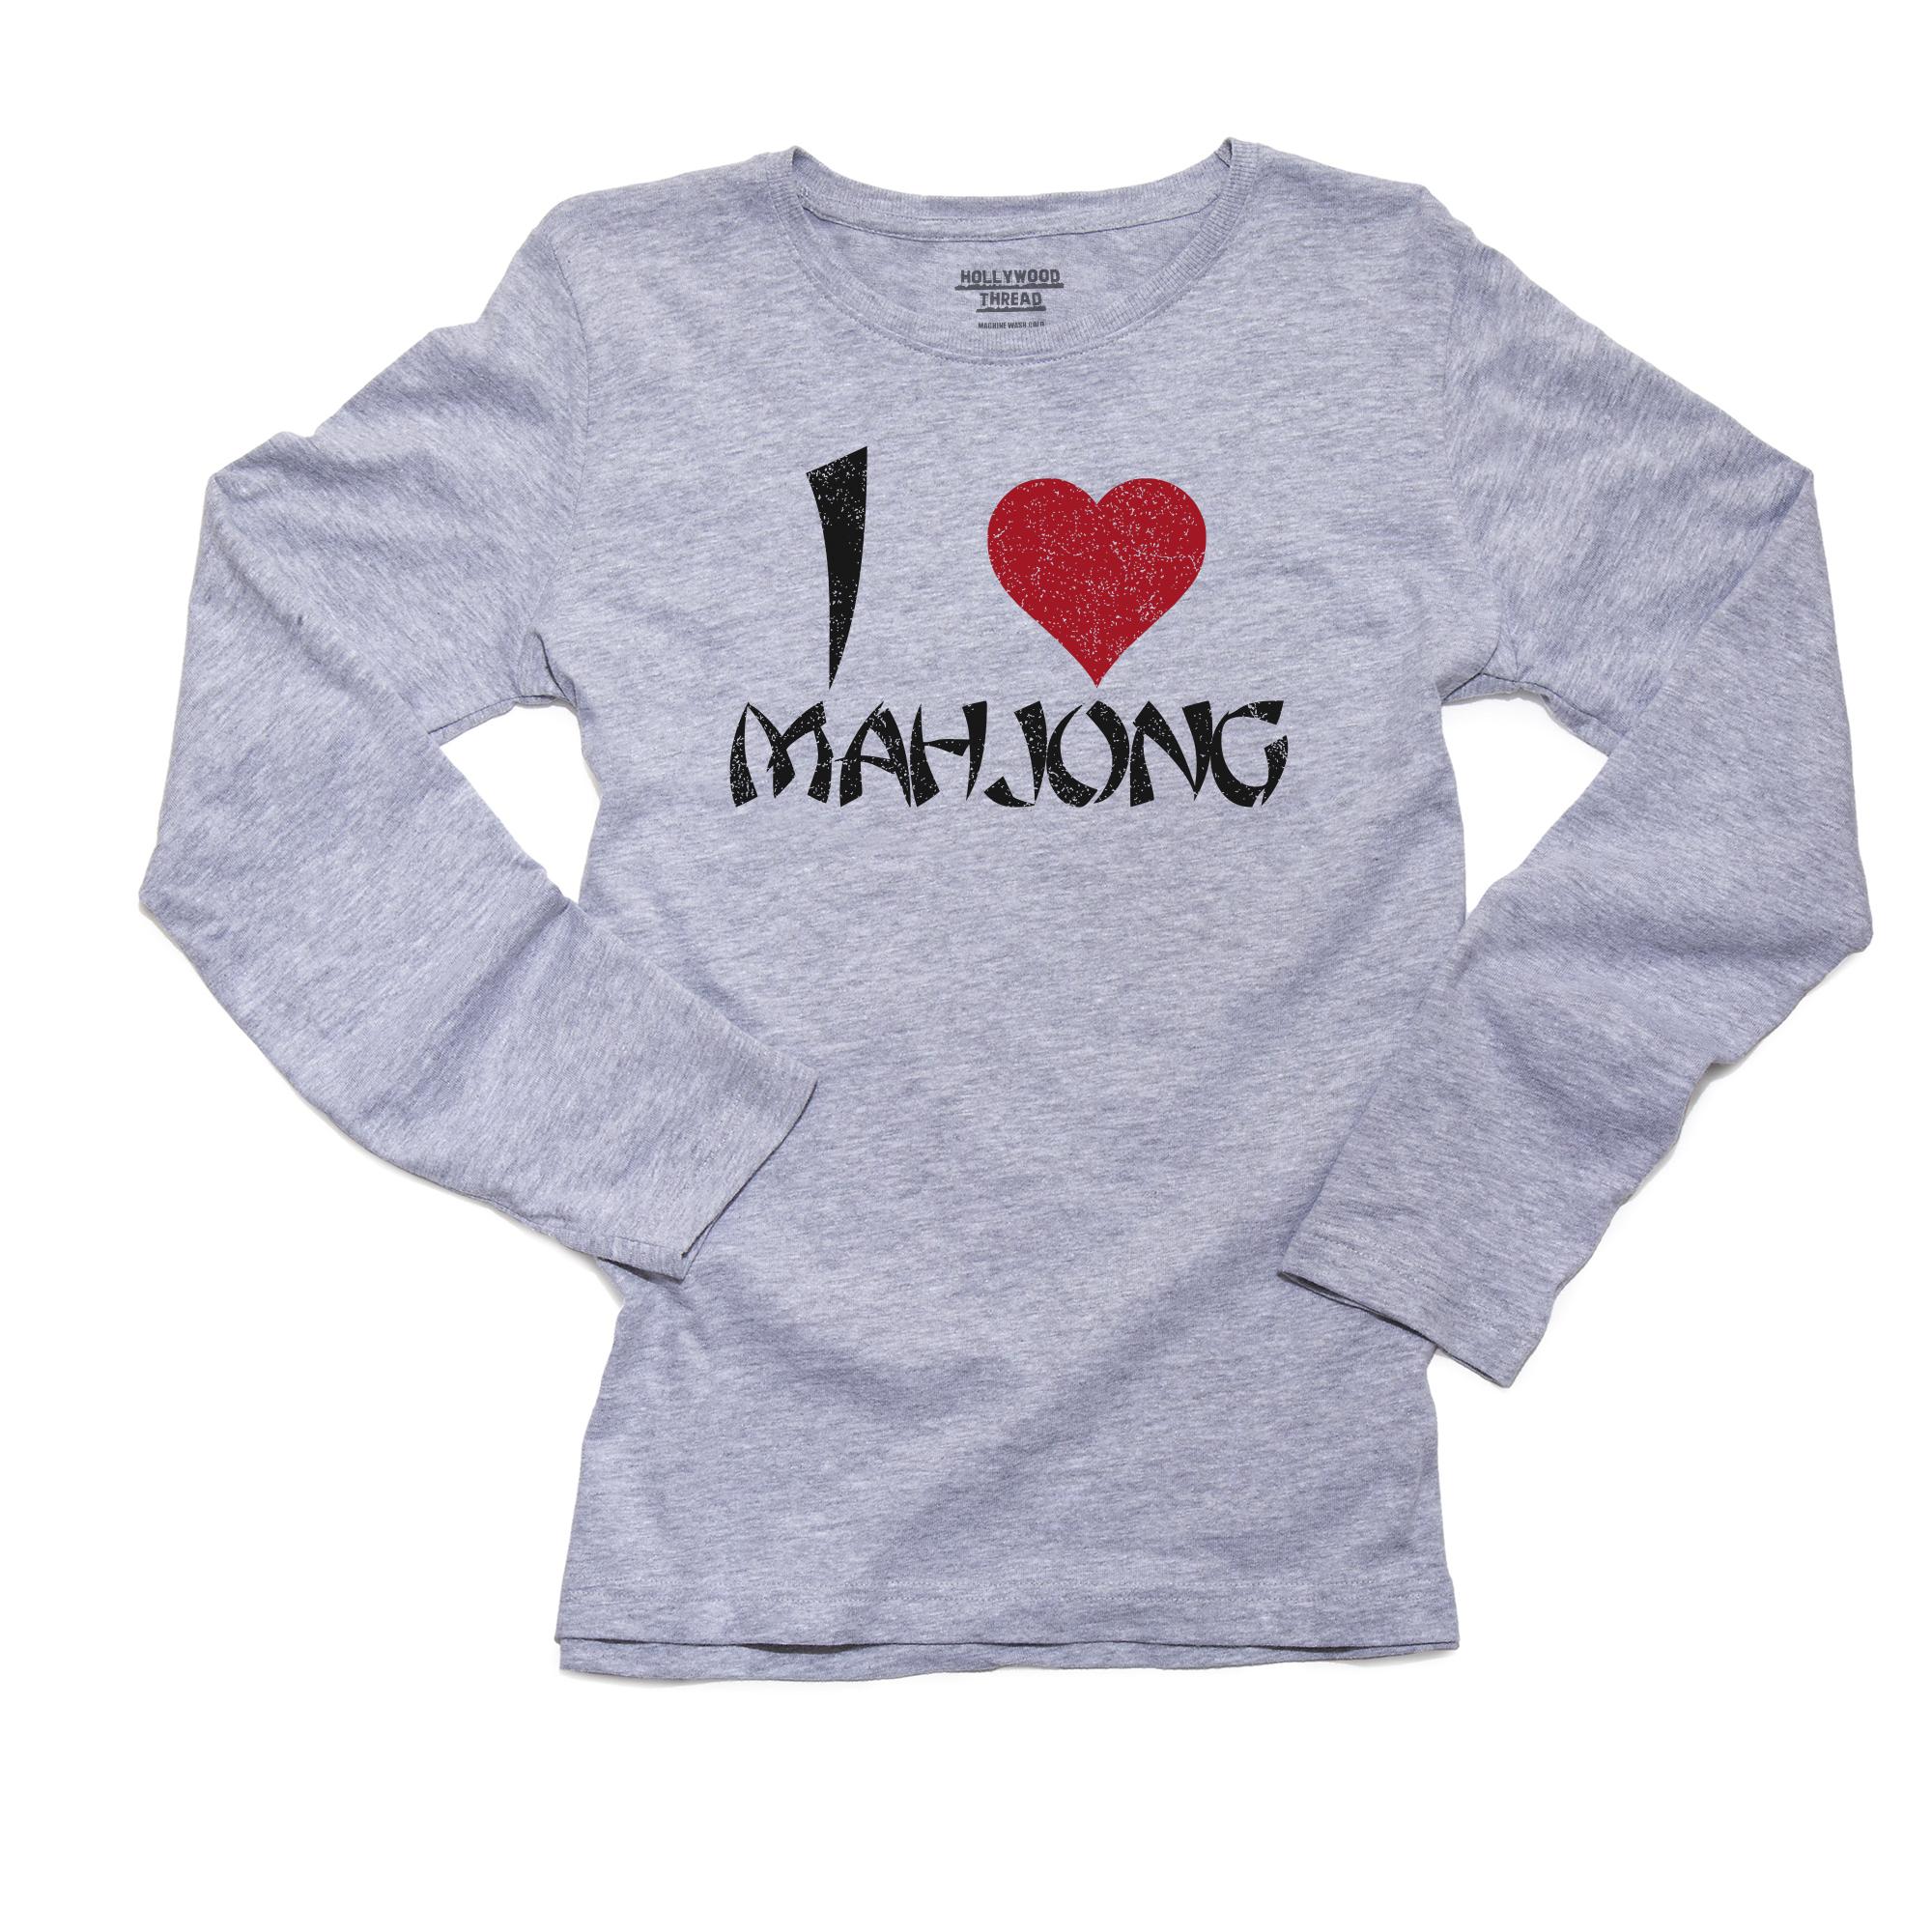 I Love Mahjong - Big Red Heart Asian Font Women's Long Sleeve Grey T-Shirt - image 1 of 2